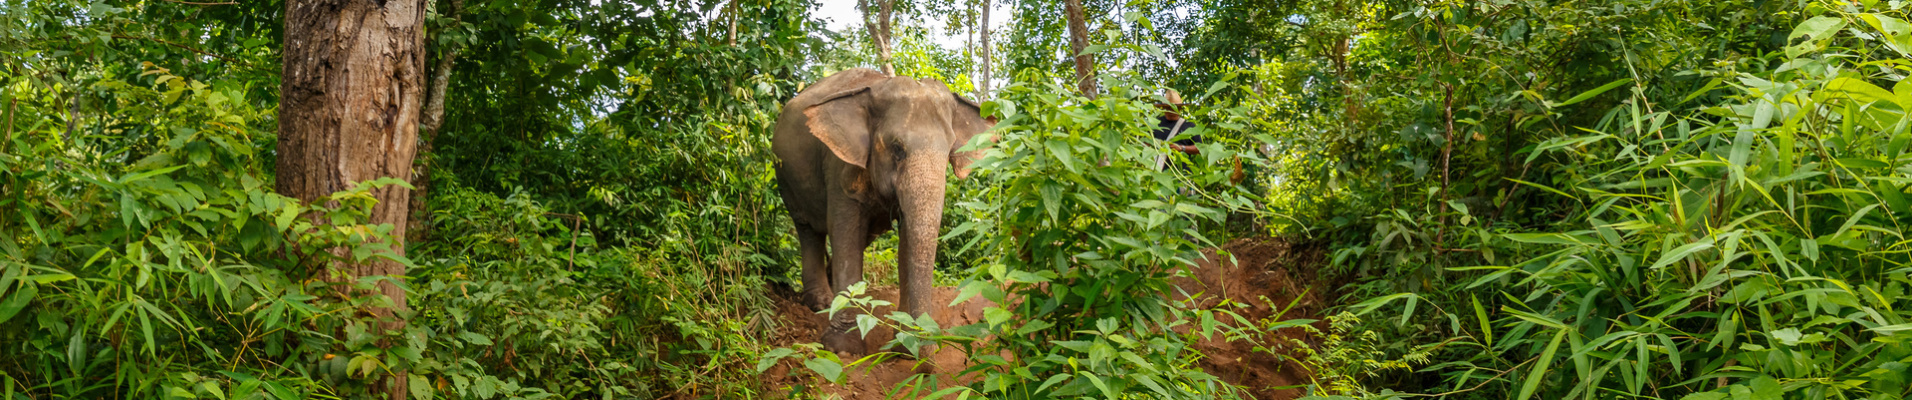 elephant trek montagne laos